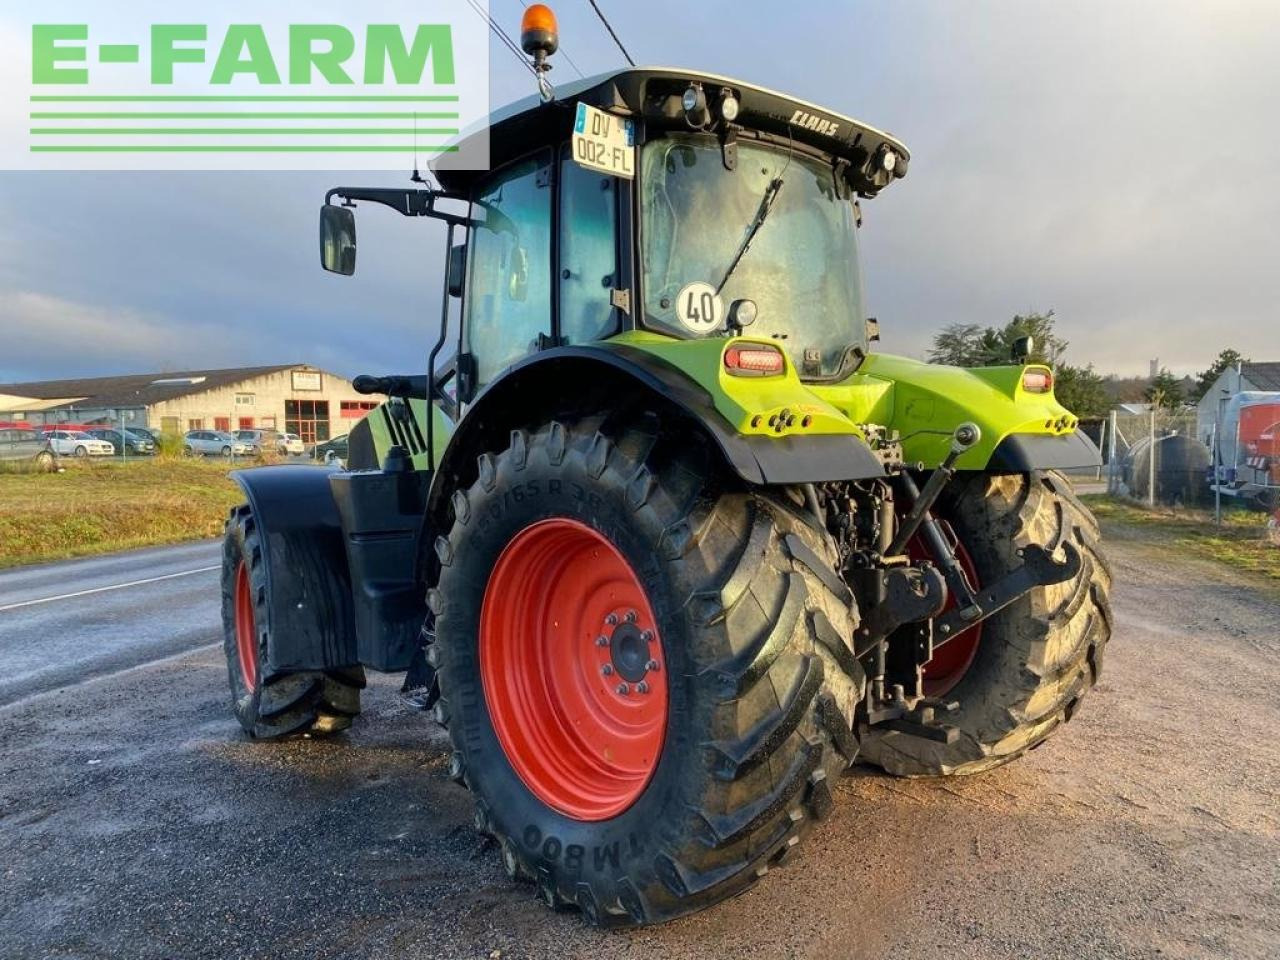 Farm tractor CLAAS arion 640 cebis